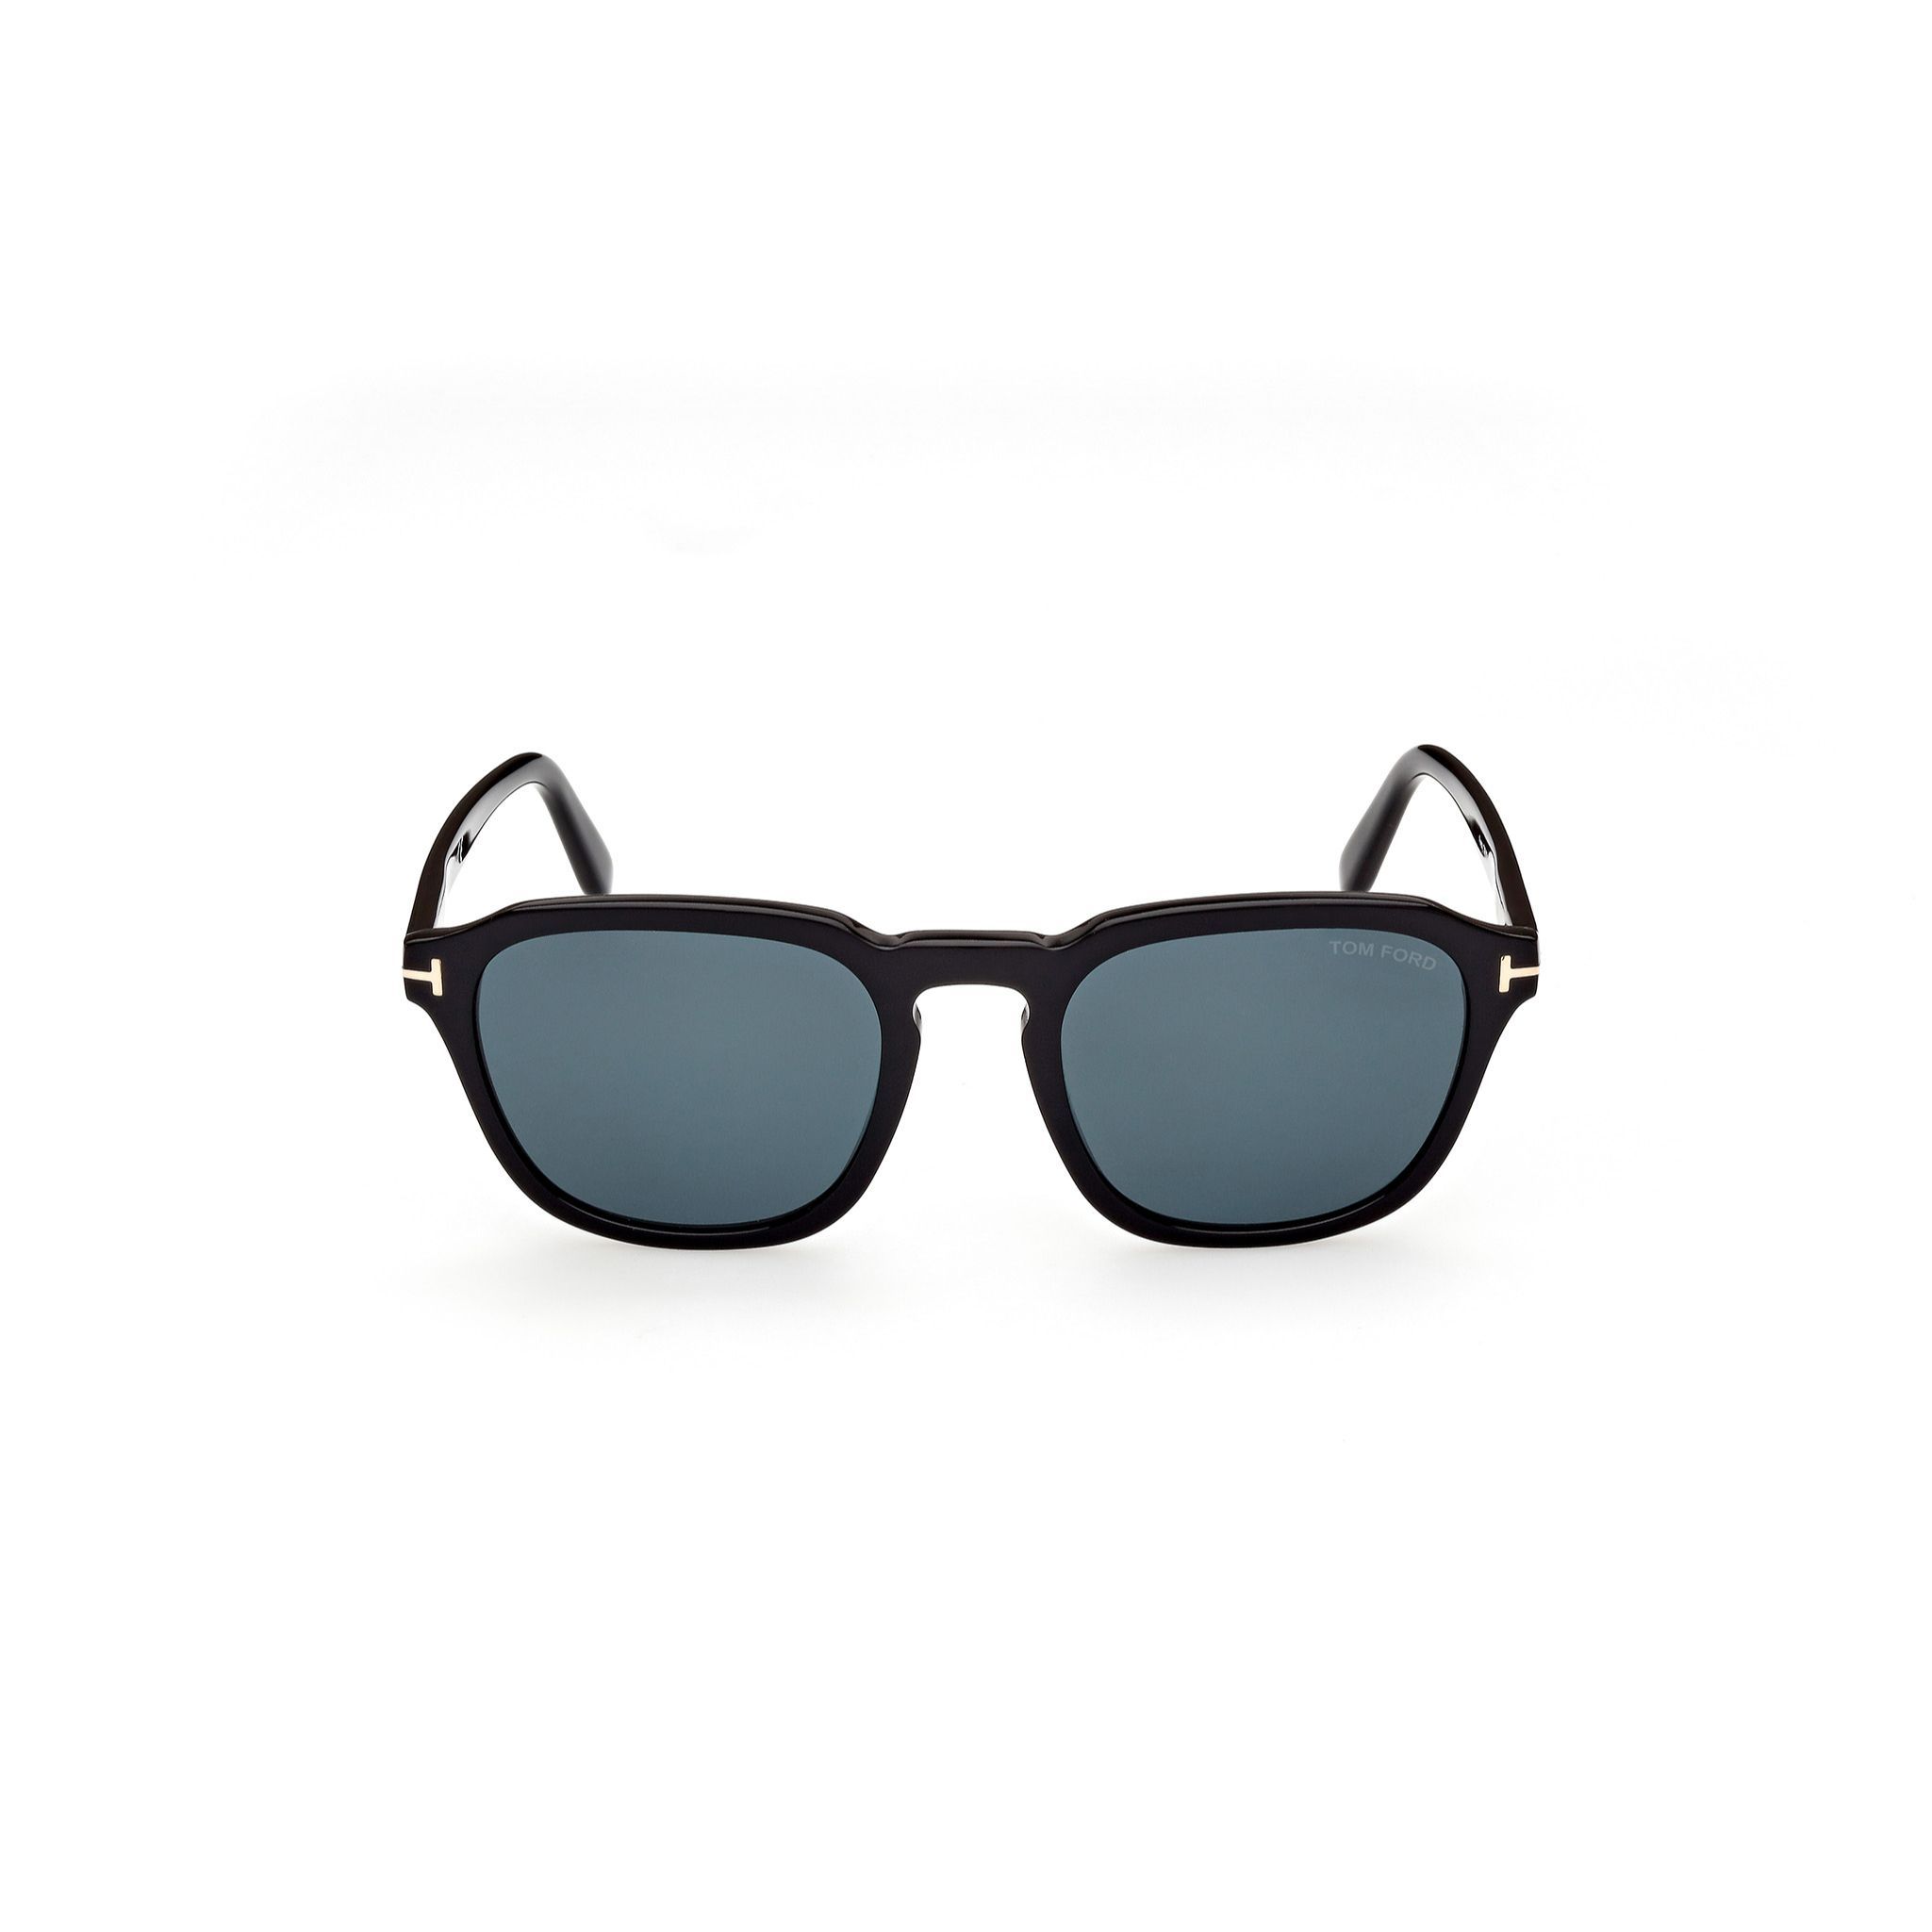 FT0931 Square Sunglasses 01V - size 52